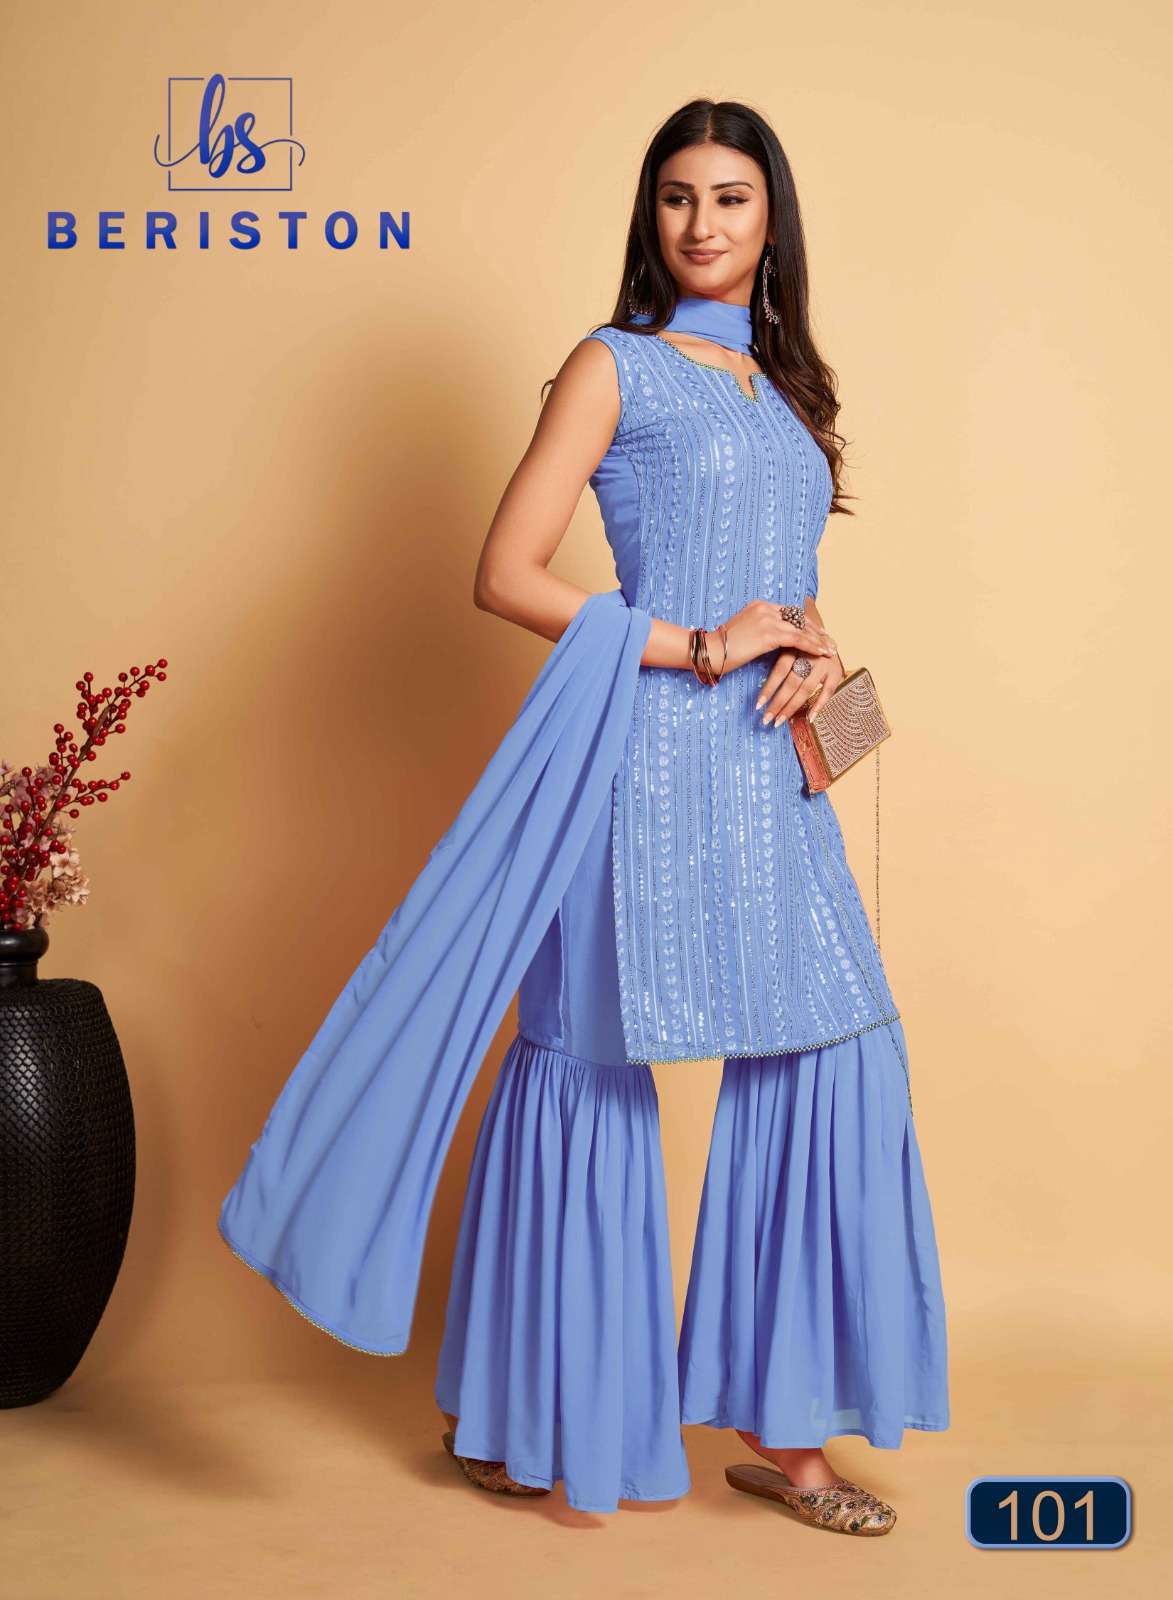 Beriston BS Vol 1 Georgette with fancy look top & Sharara co...